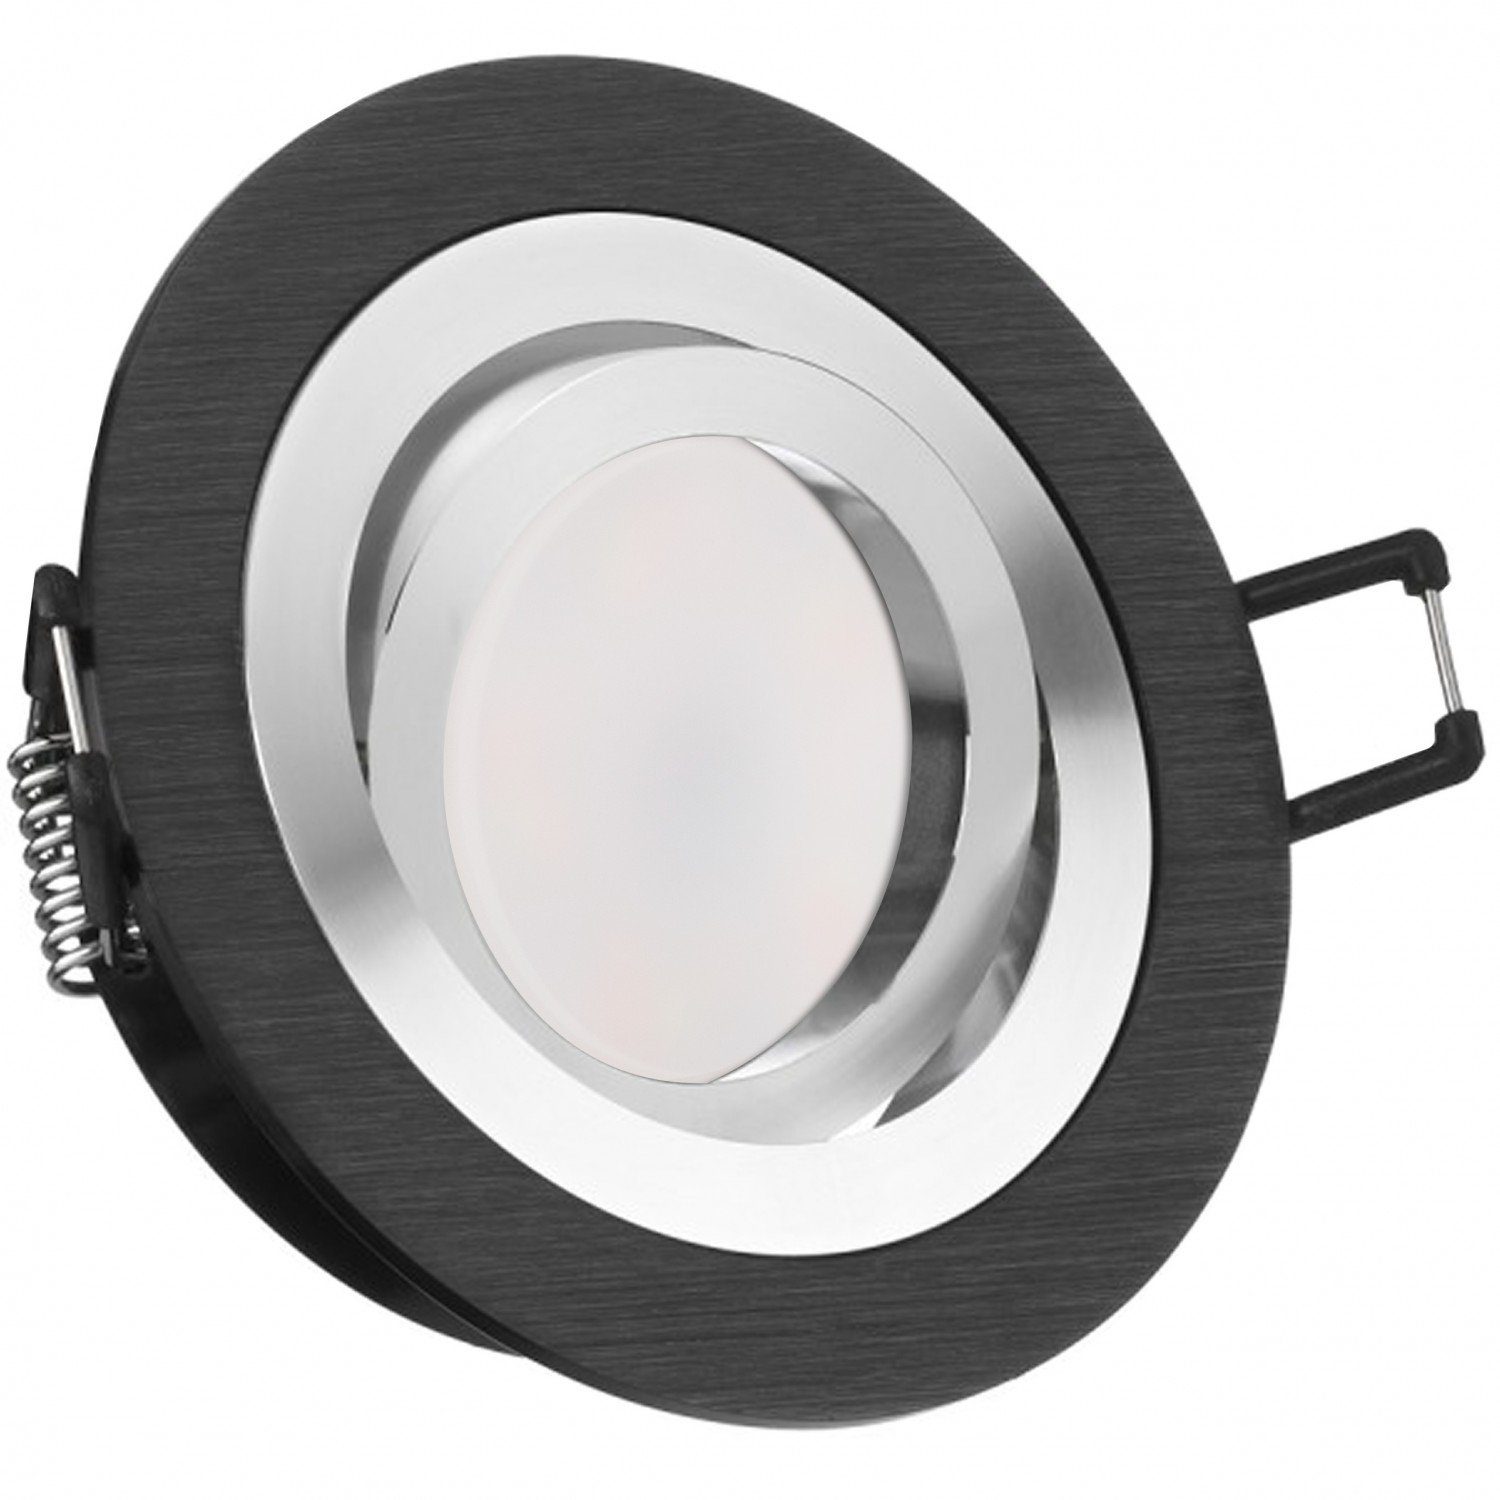 Einbaustrahler Einbaustrahler schwarz LEDANDO mit flach 5W LED LED Set in von extra Leuchtmittel